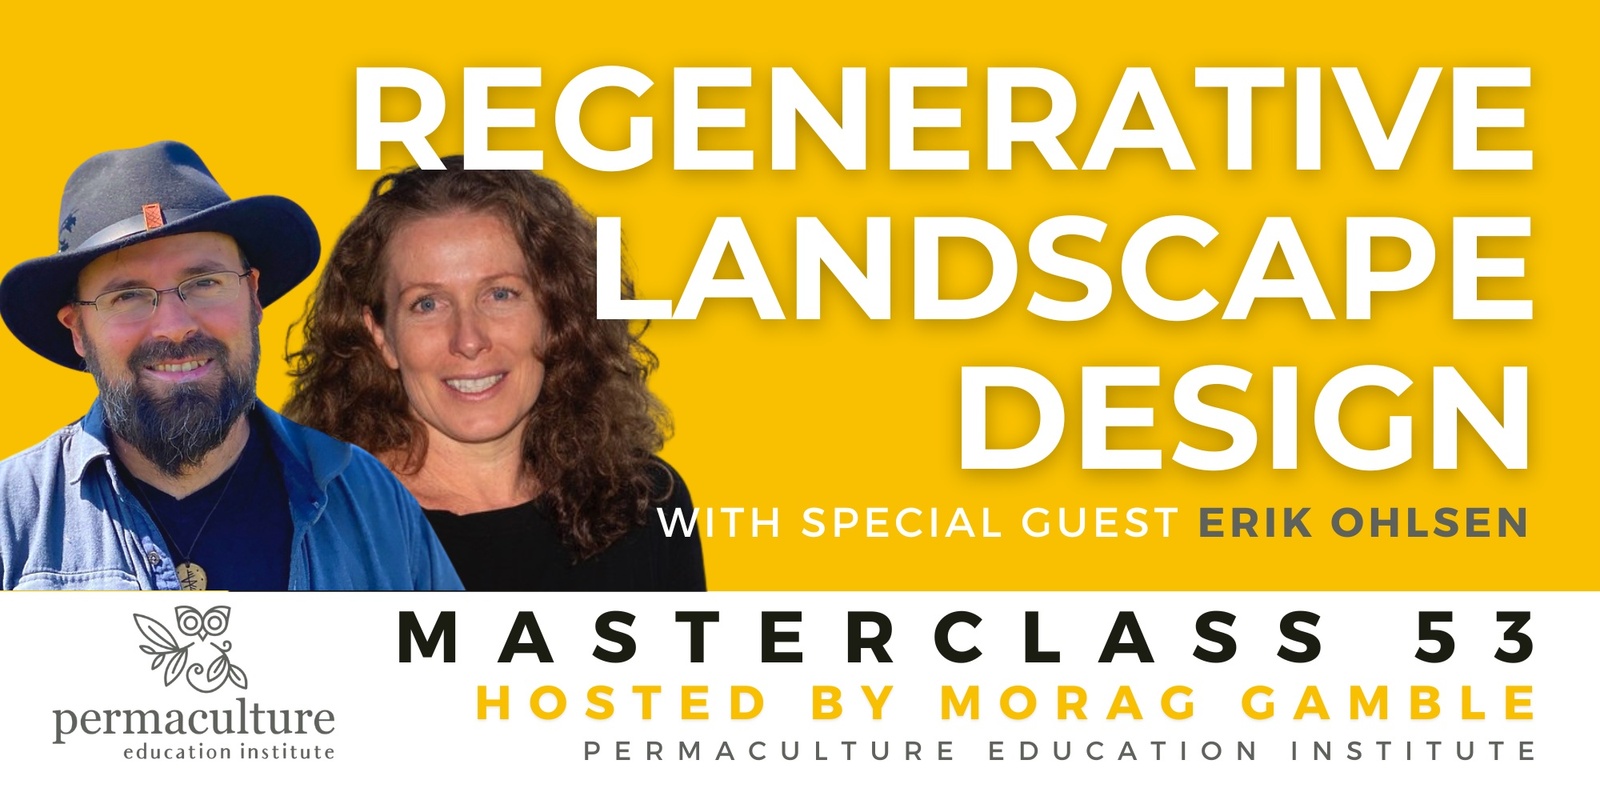 Banner image for Masterclass 53: Regenerative Landscape Design with Erik Ohlsen and Morag Gamble